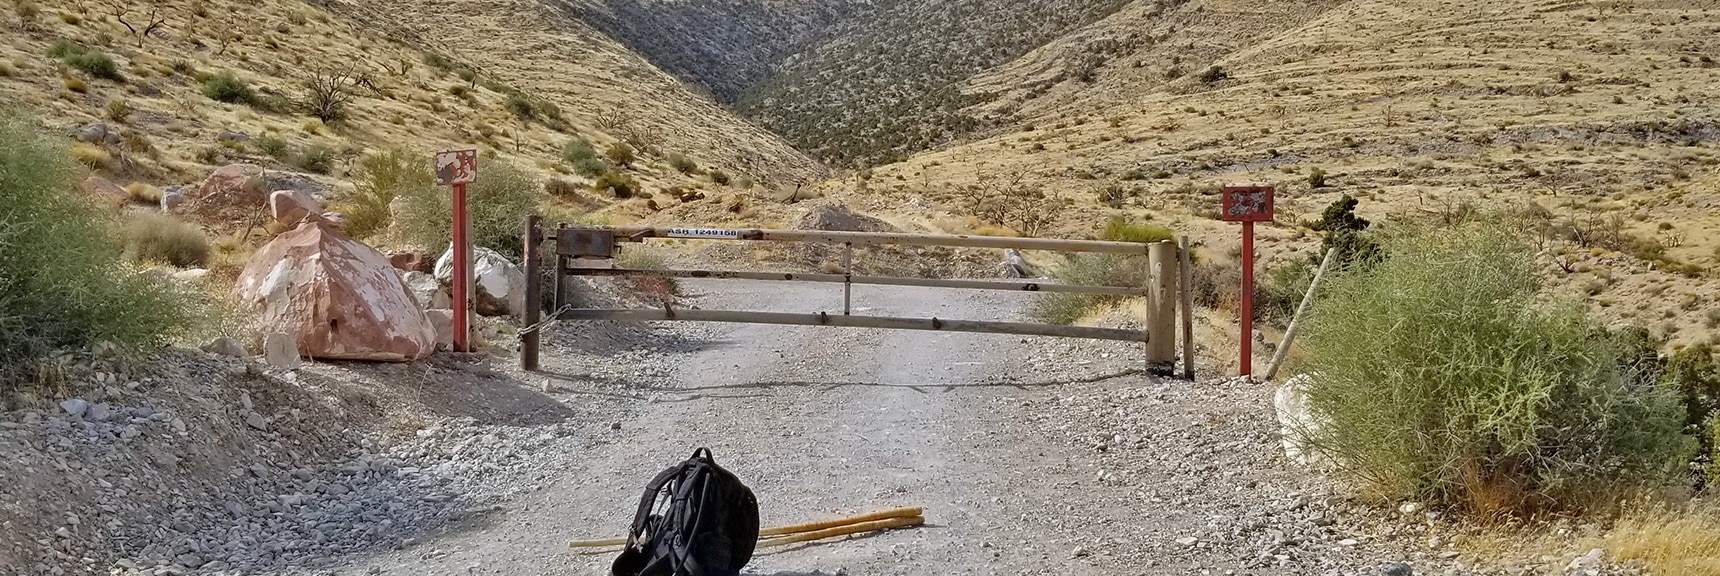 Gated Entrance to Potosi Mountain Communications Equipment Maintenance Road | Potosi Mountain Spring Mountains Nevada